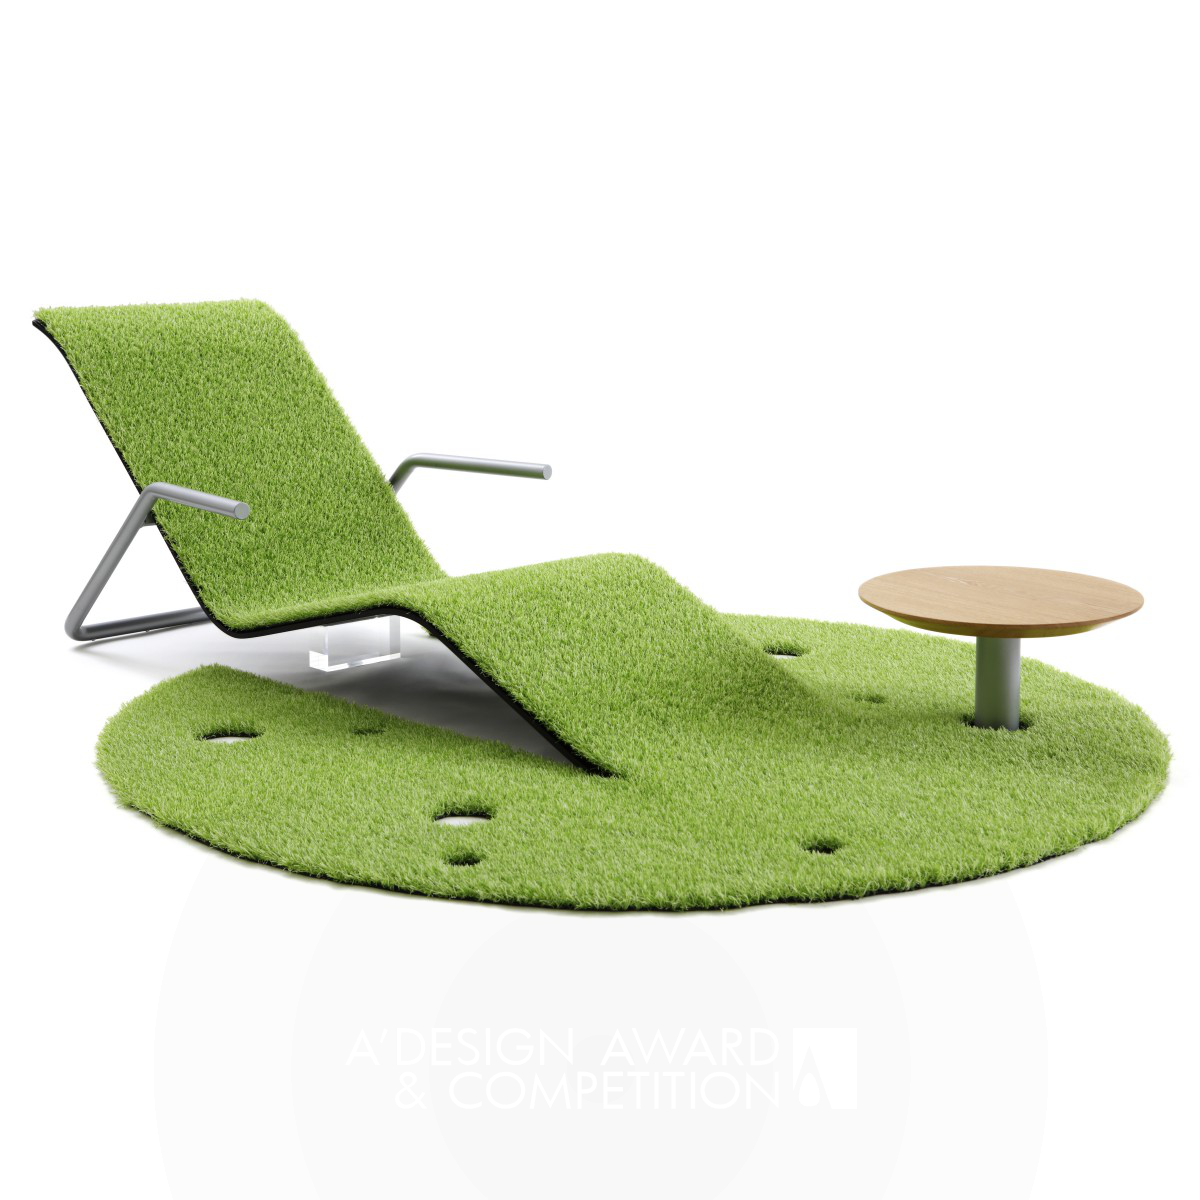 Turf rug lounger Lounge chair by MASUO FUJIMURA